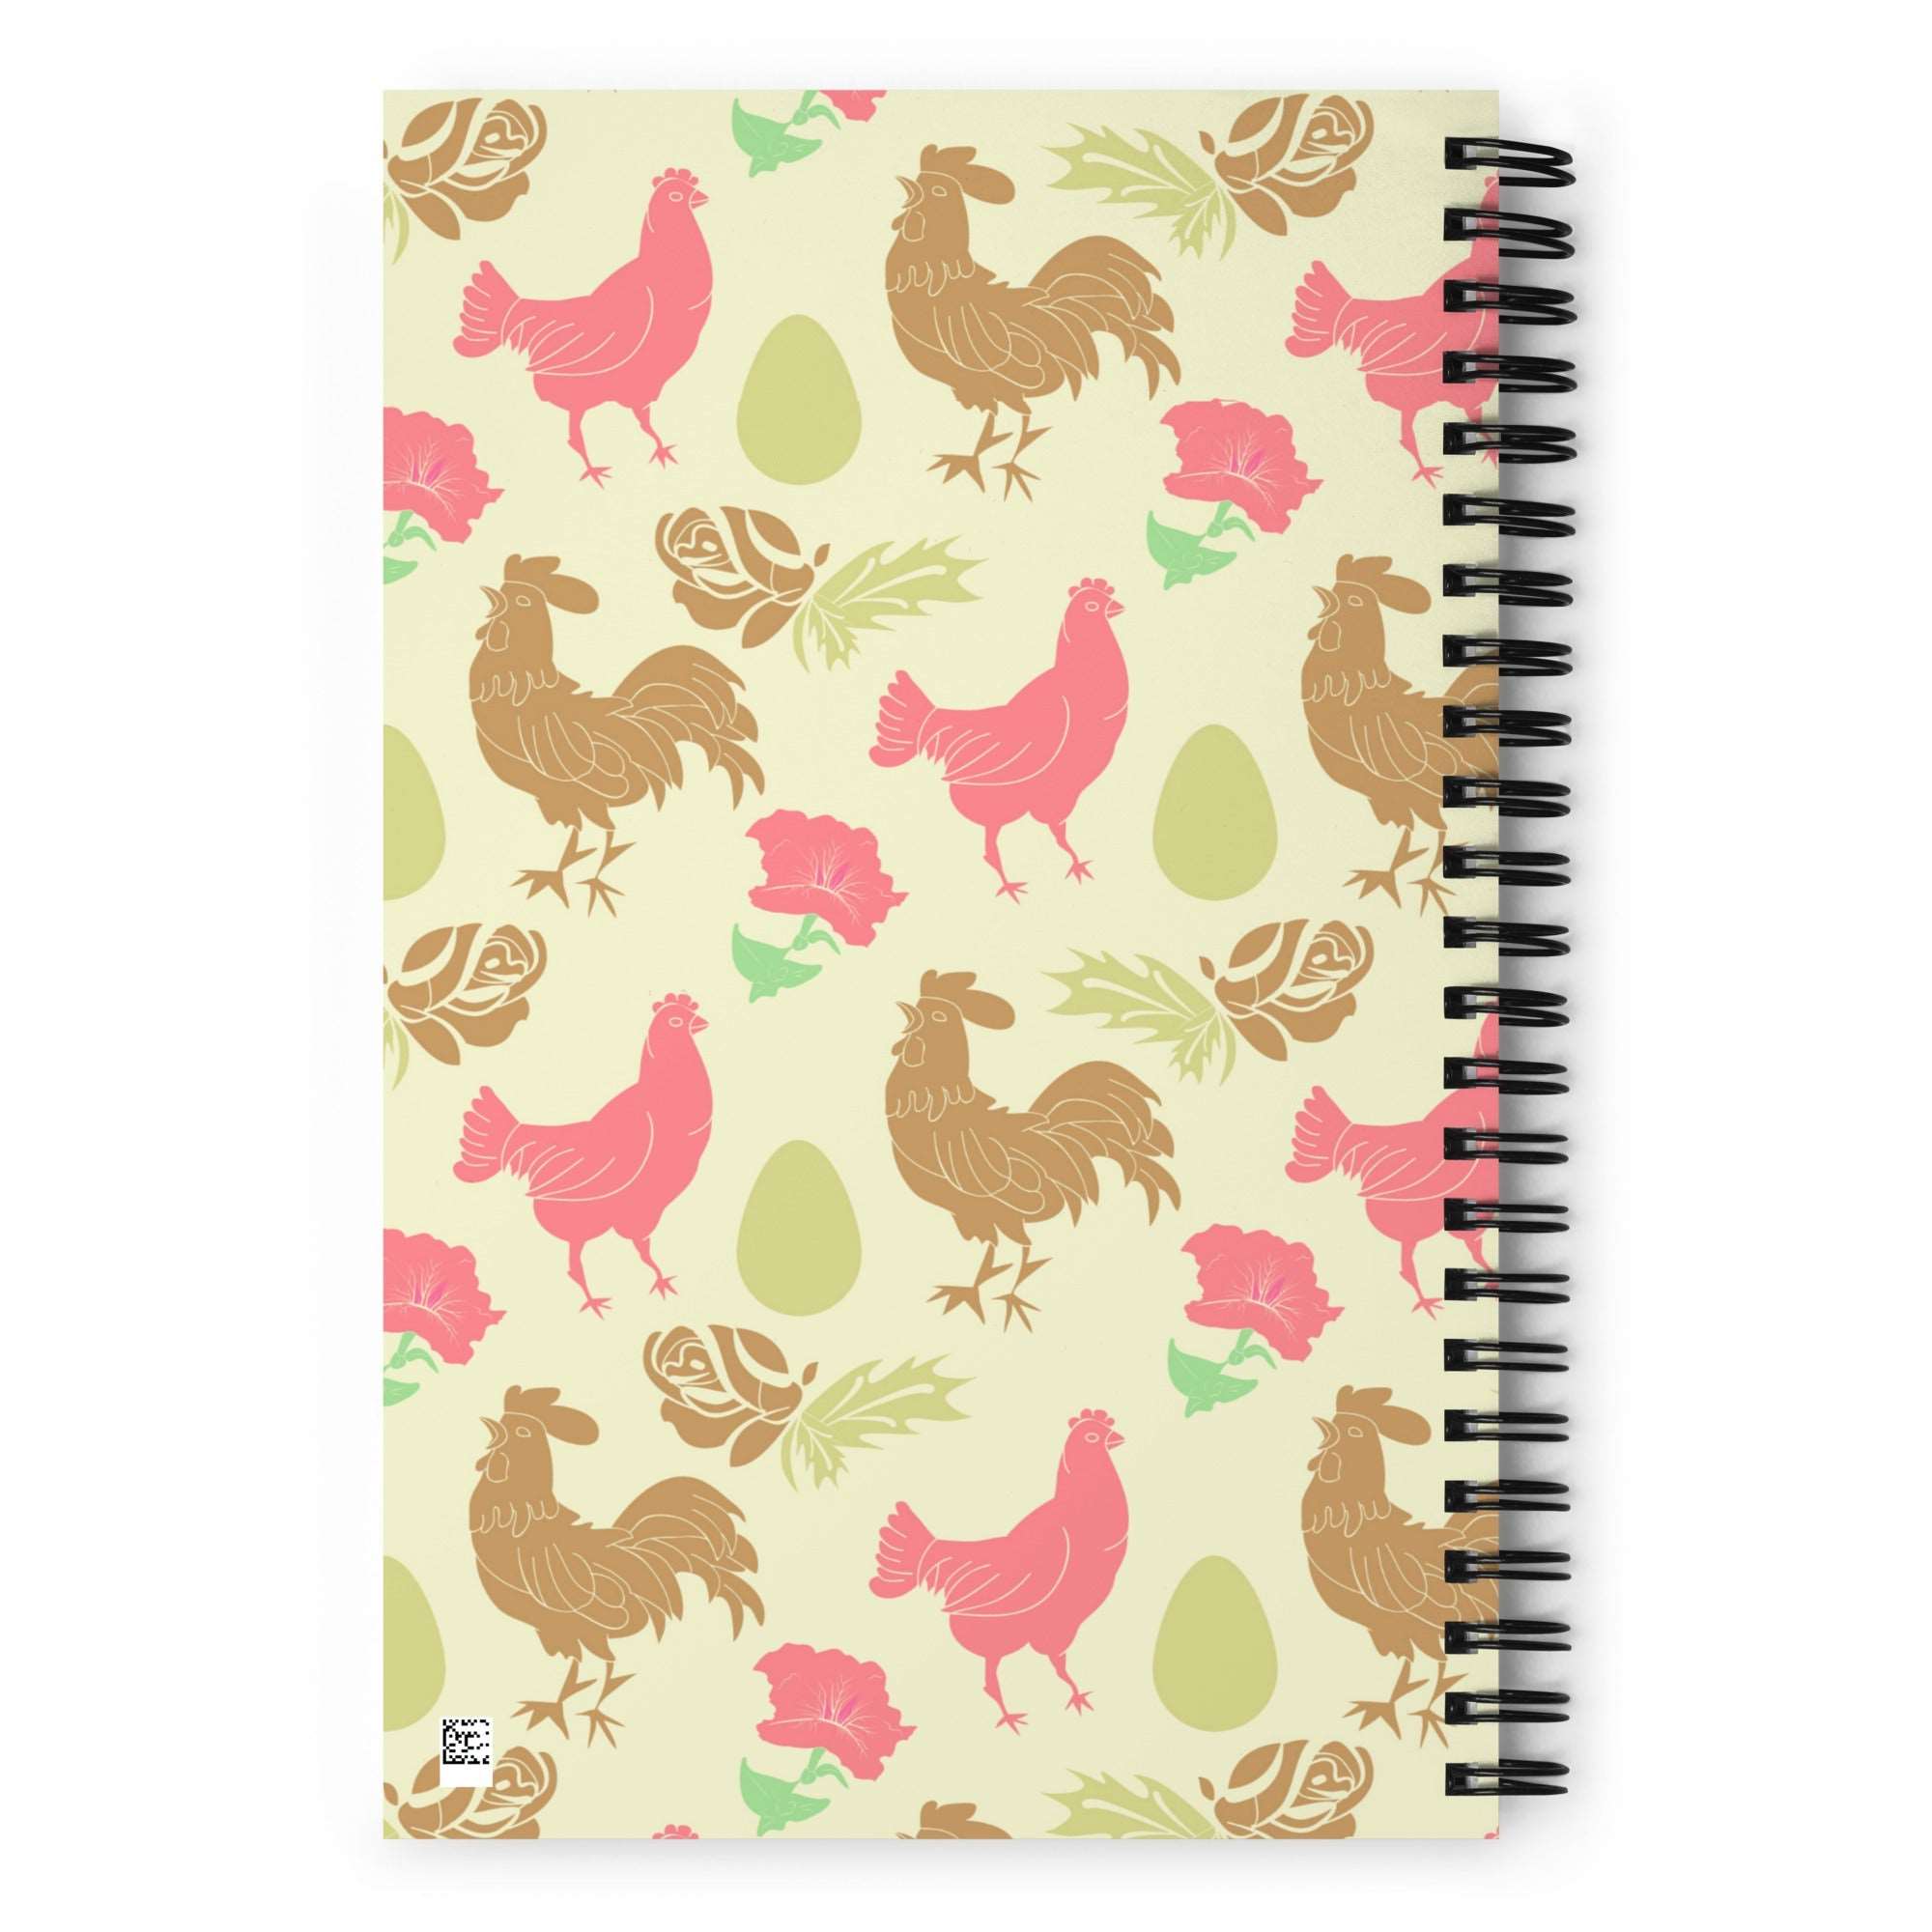 Festive Chicken Spiral Notebook - Cluck It All Farms